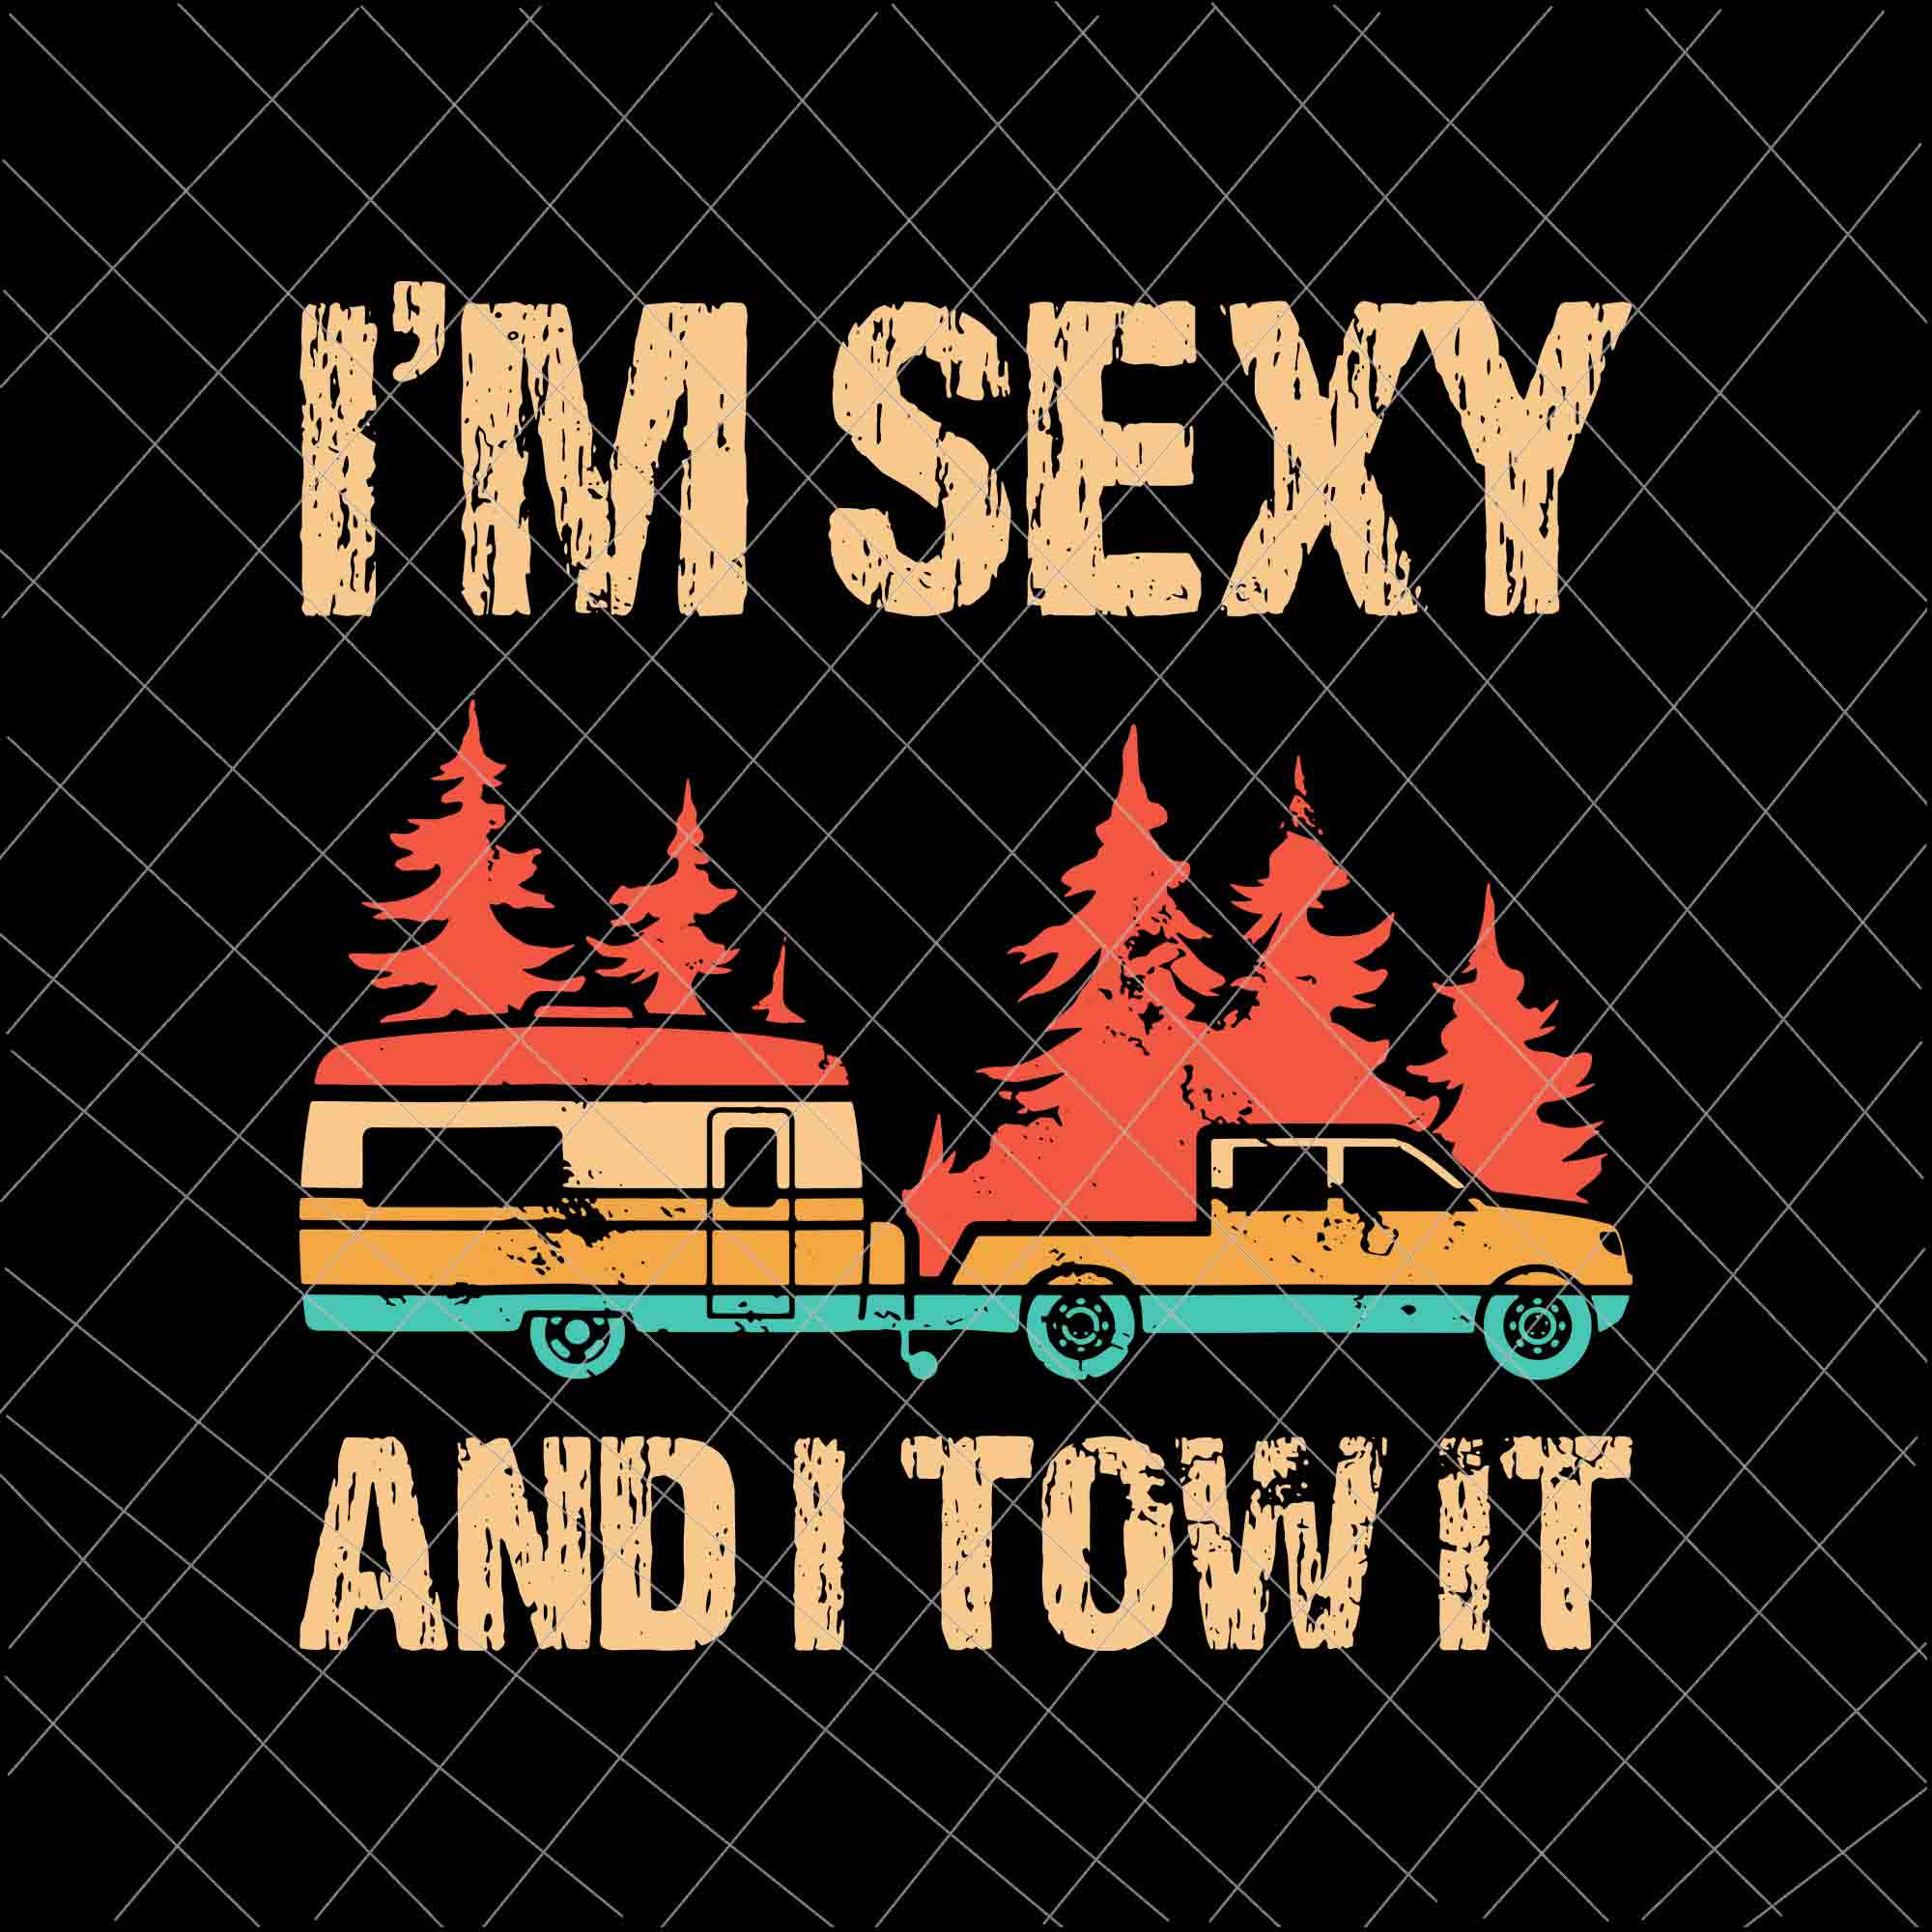 I'm Sexy And I Tow It Svg, Funny Caravan Camping RV Trailer Svg, Camping svg, Quote Camping Svg